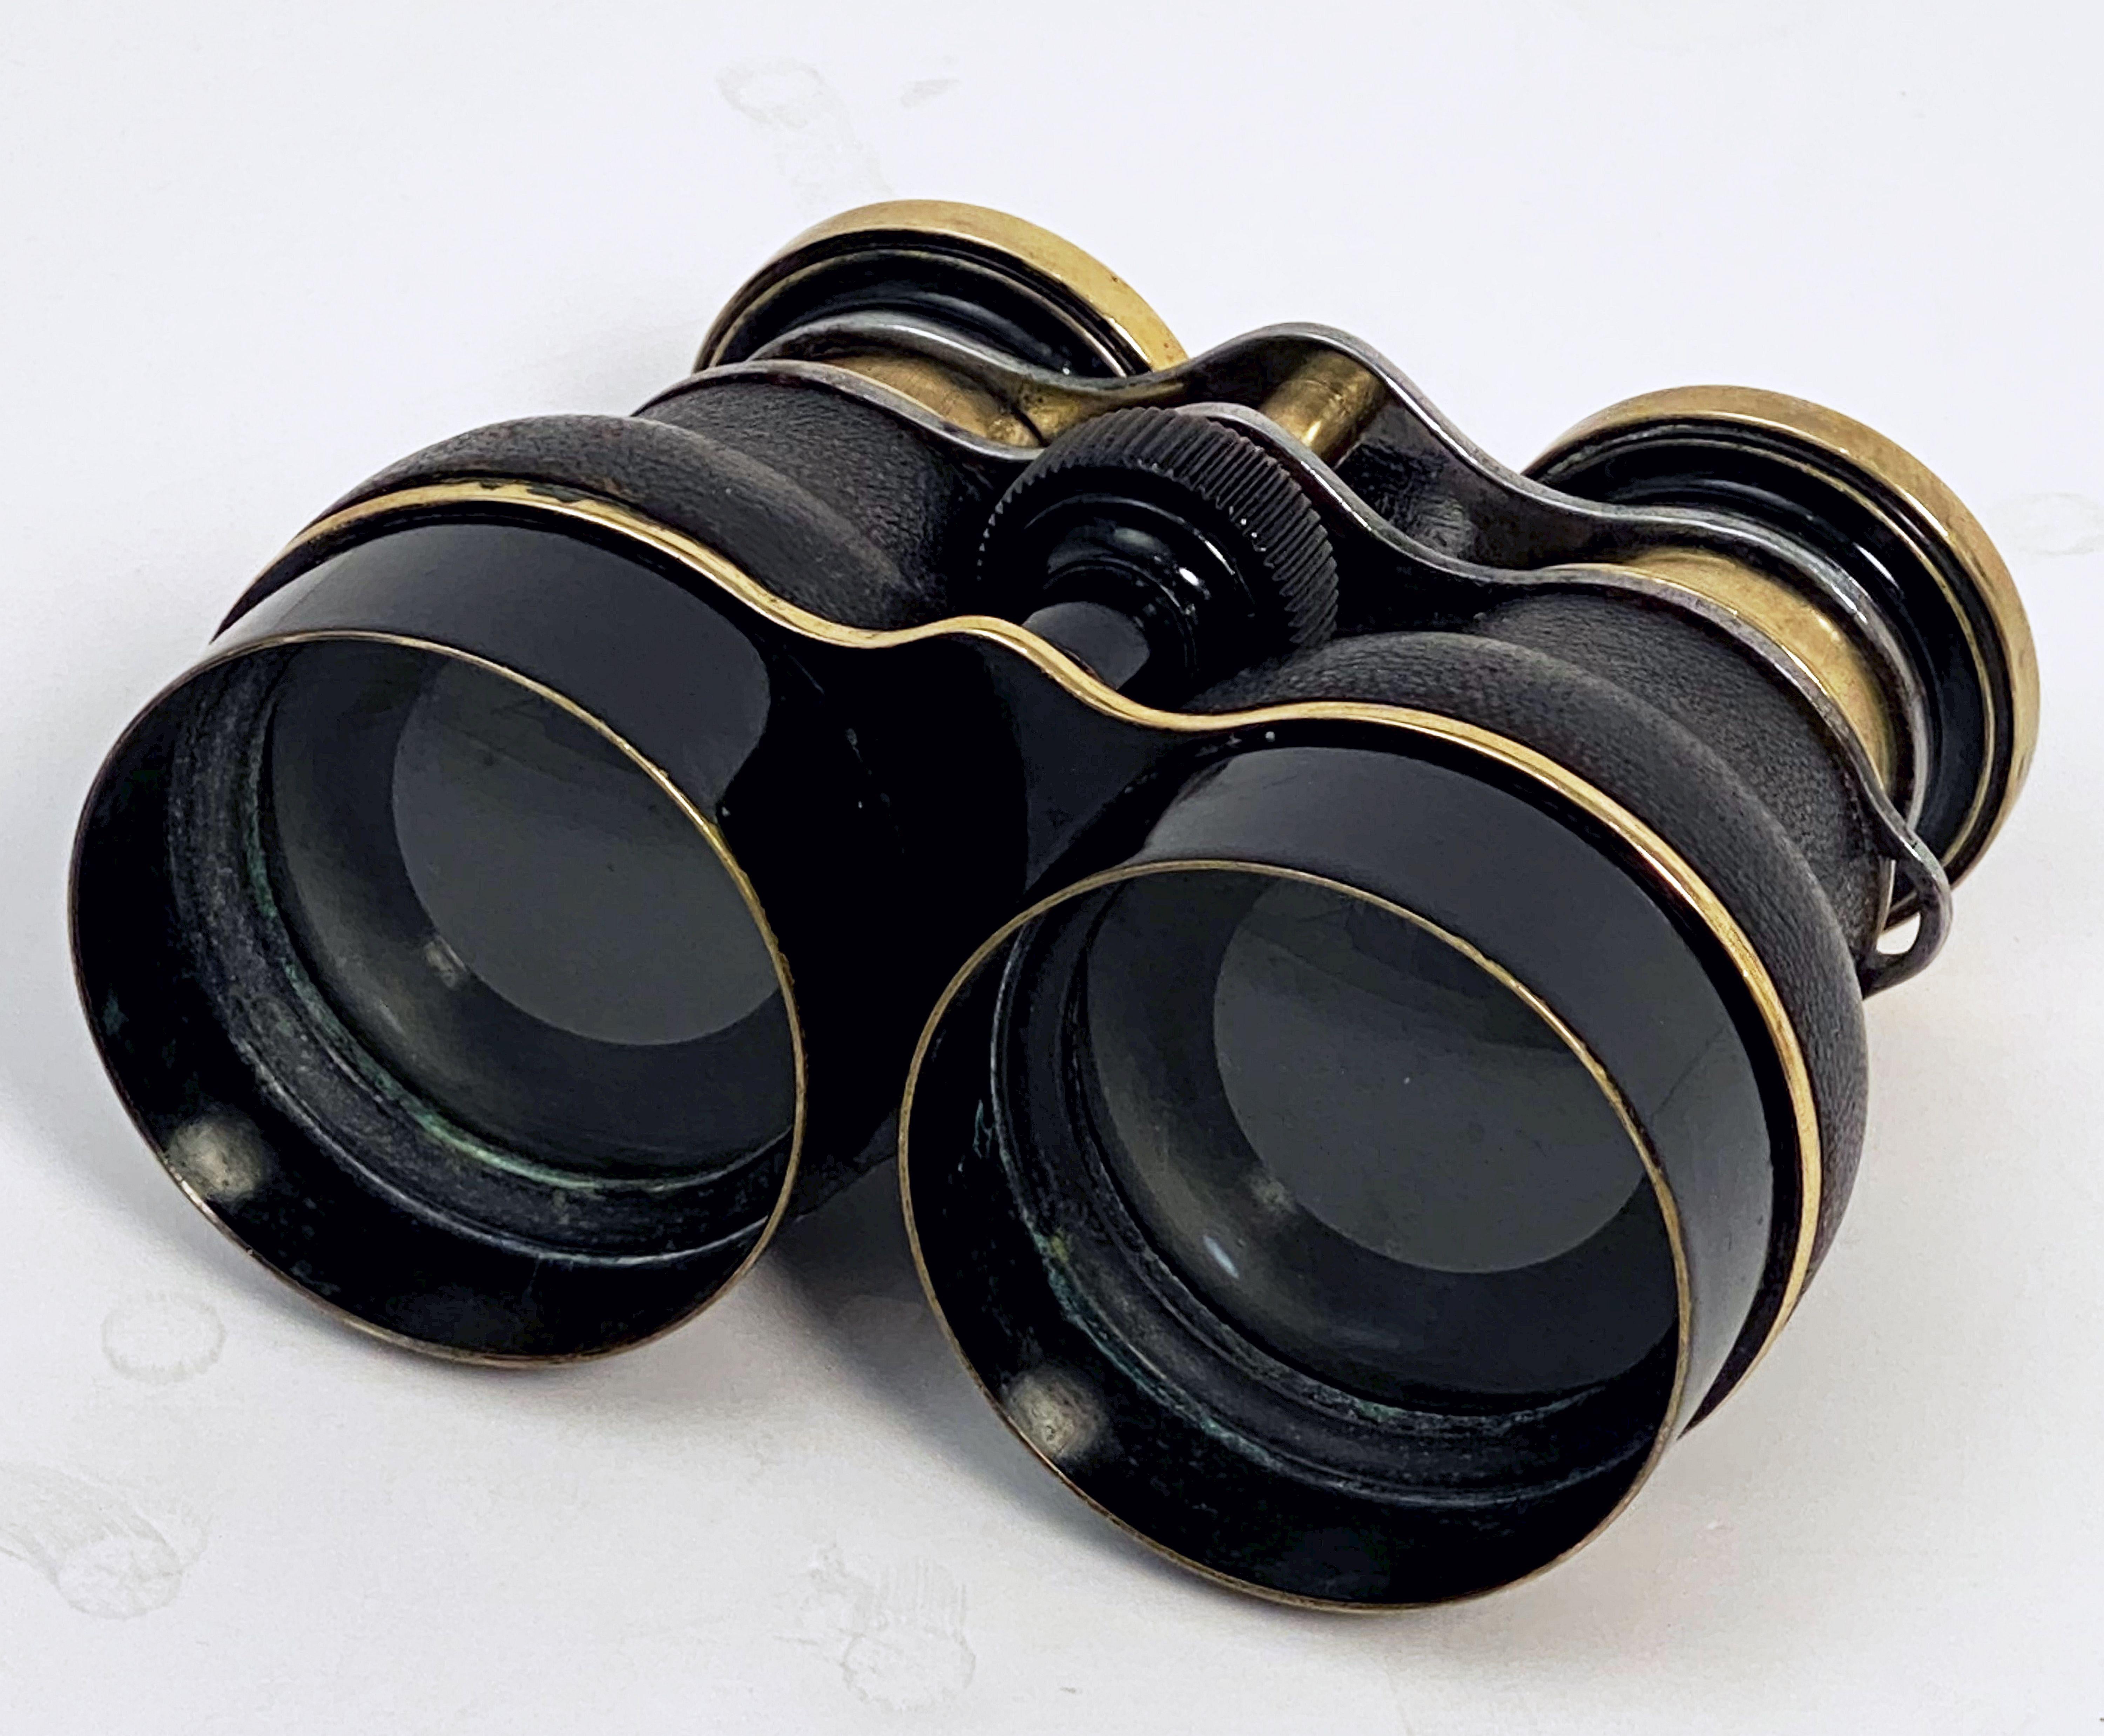 Steel English Working Binoculars or Field Glasses by J.H. Steward Ltd., circa 1920